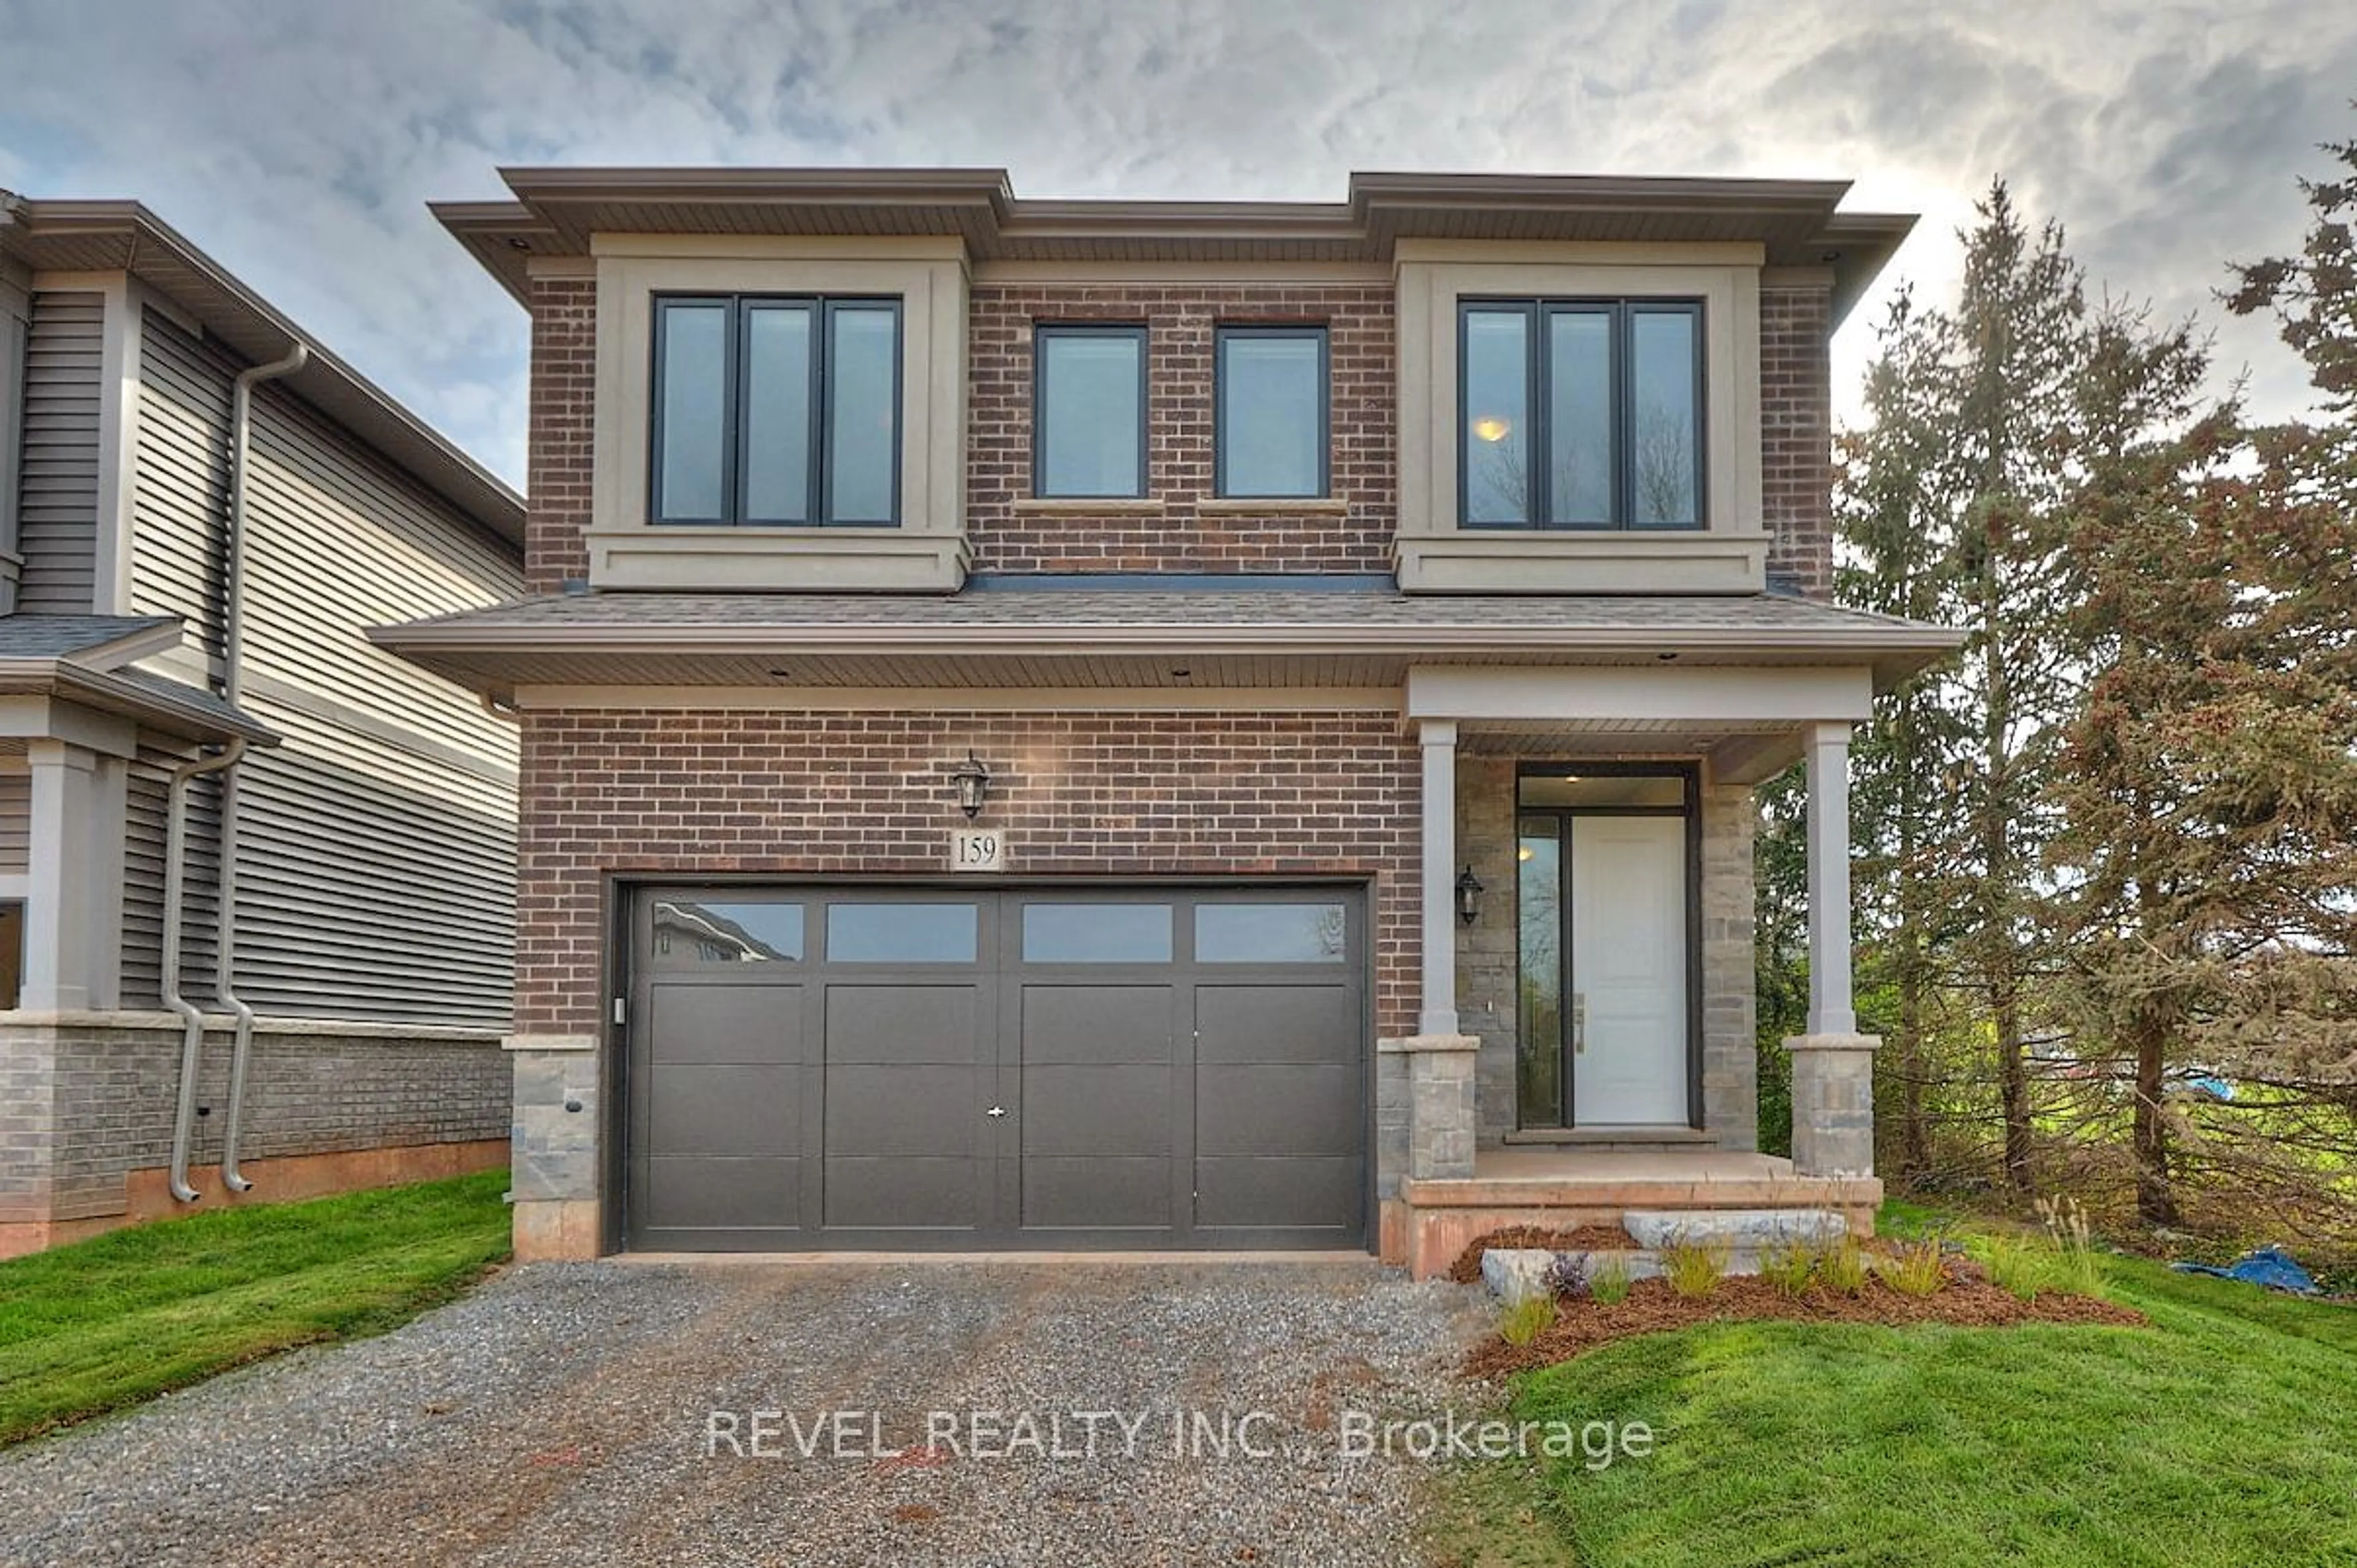 Home with brick exterior material for 159 Starfire Cres, Hamilton Ontario L8E 0K9